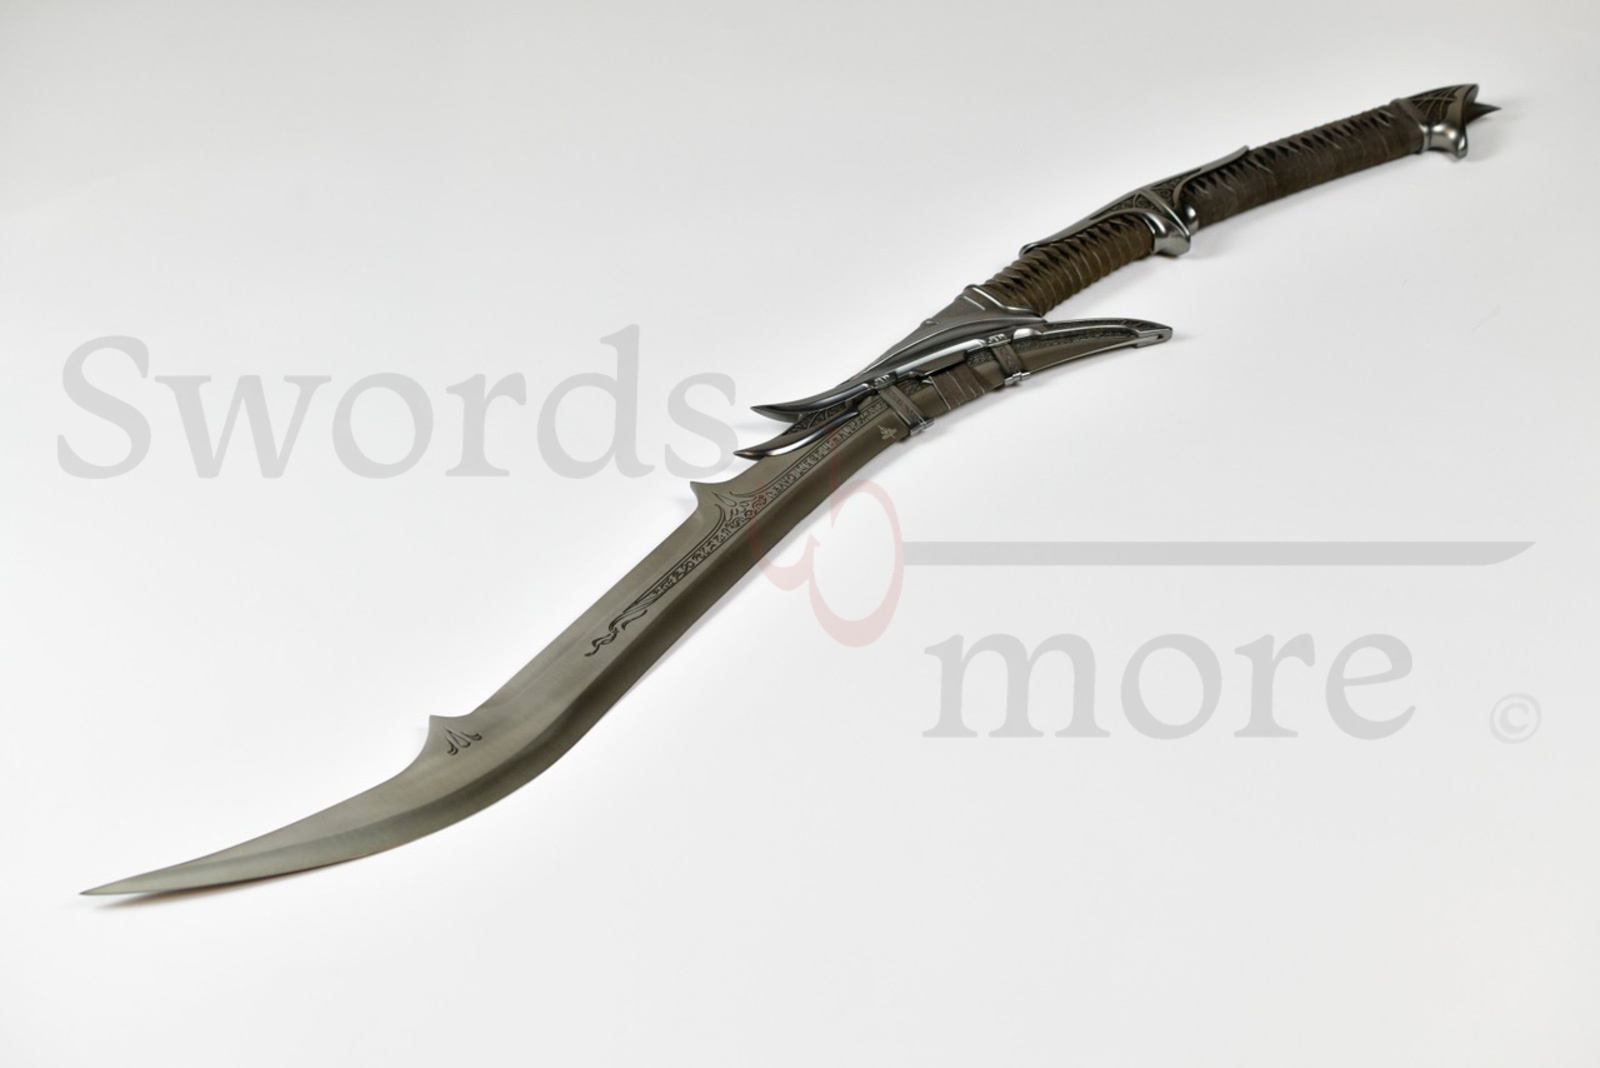 Kit Rae Mithrodin: Dark Edition Fantasy Sword